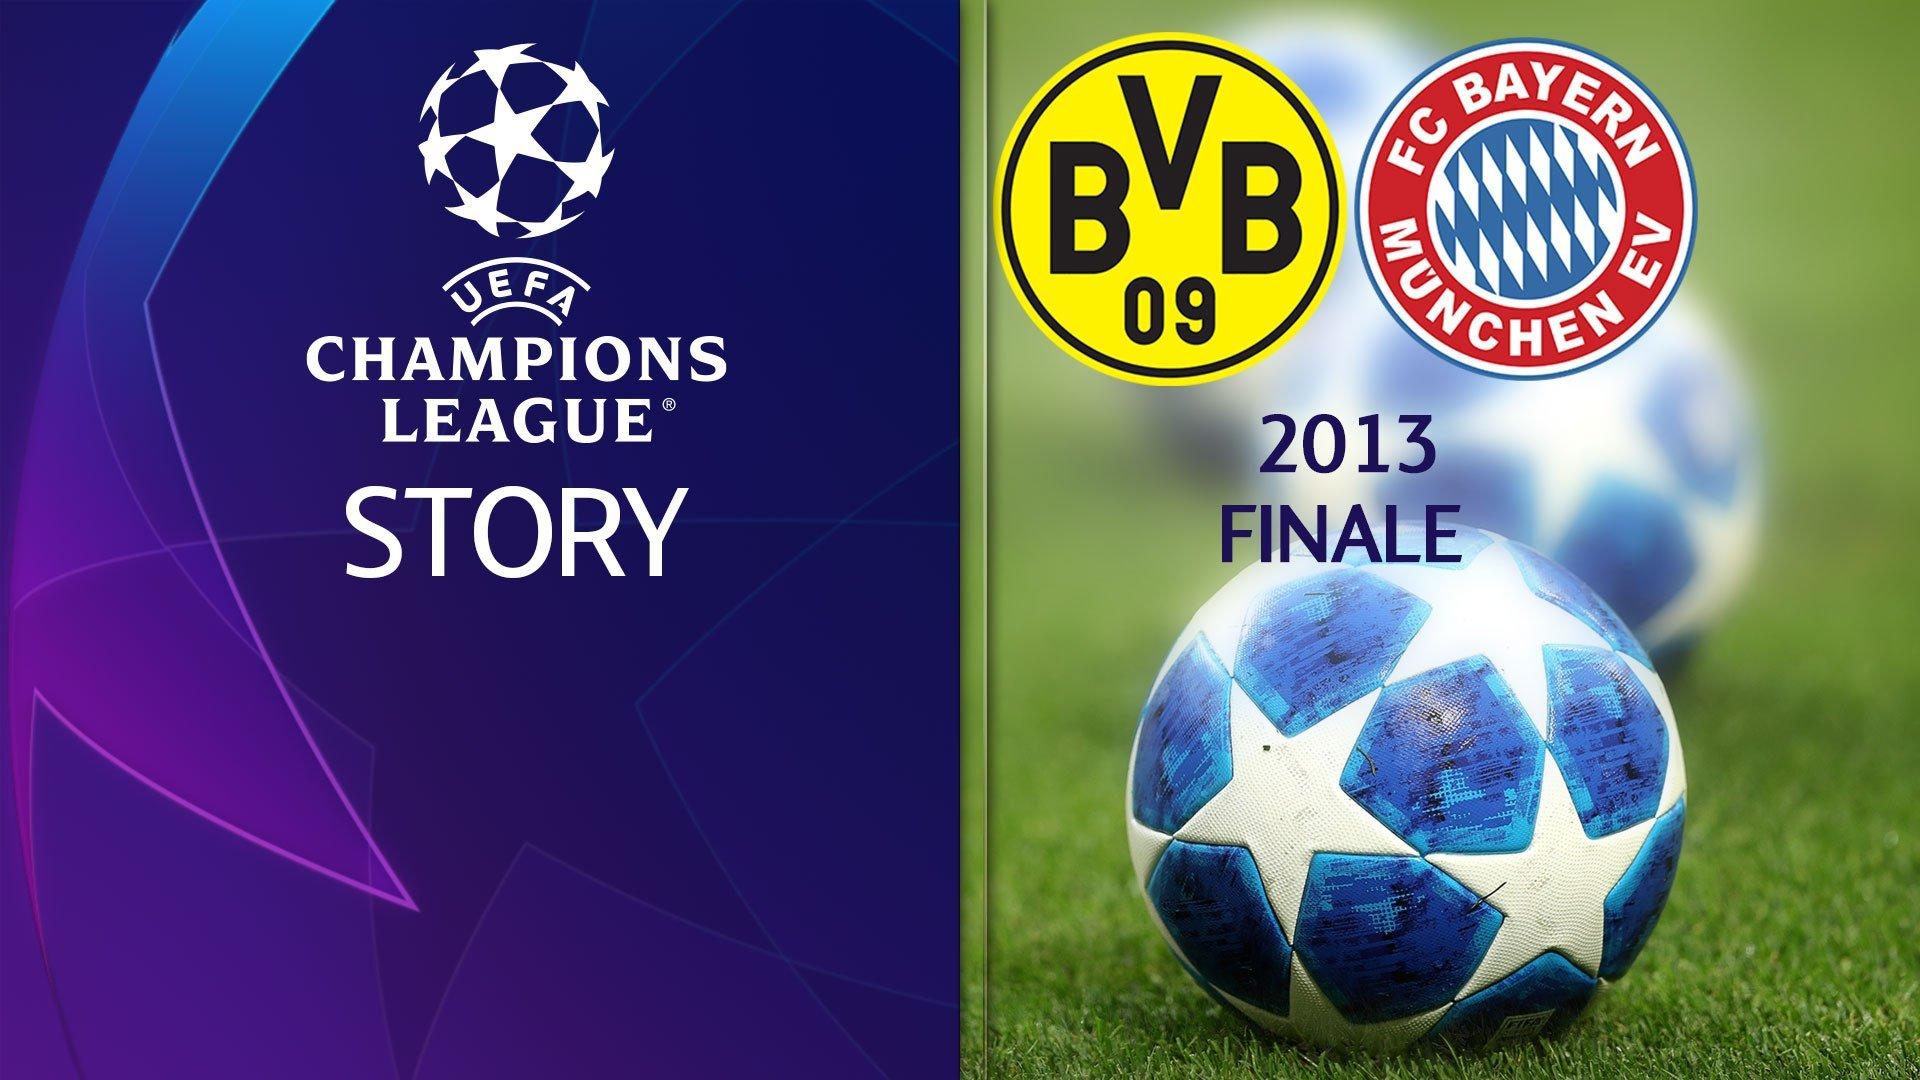 Borussia Dortmund - Bayern Monaco 2013